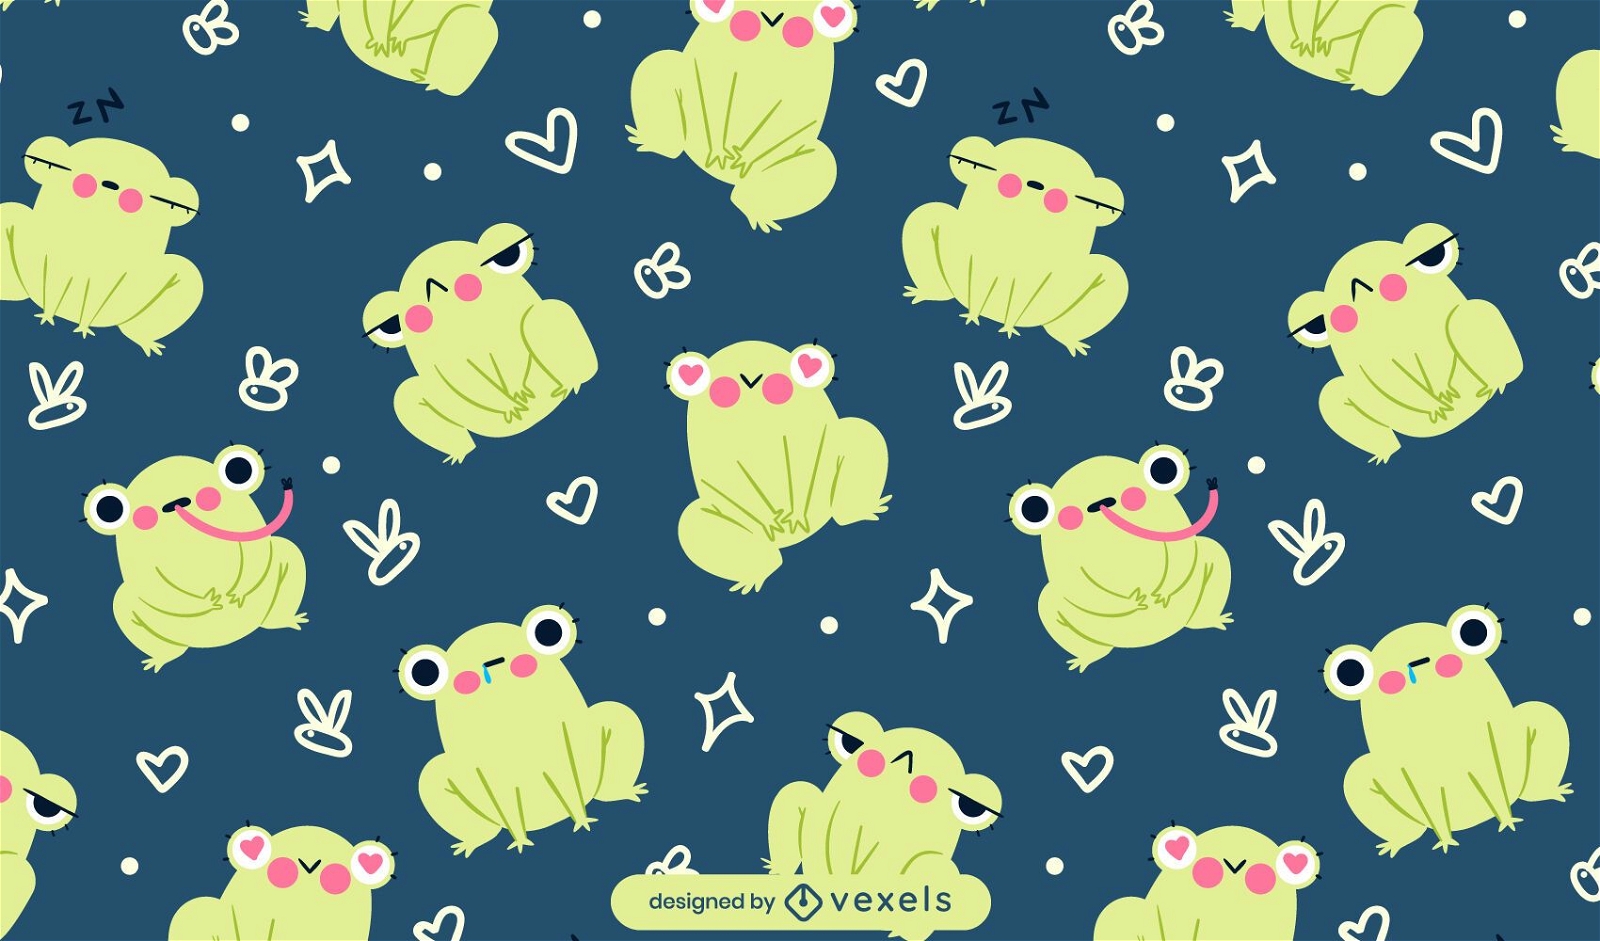 cartoon frog wallpaper